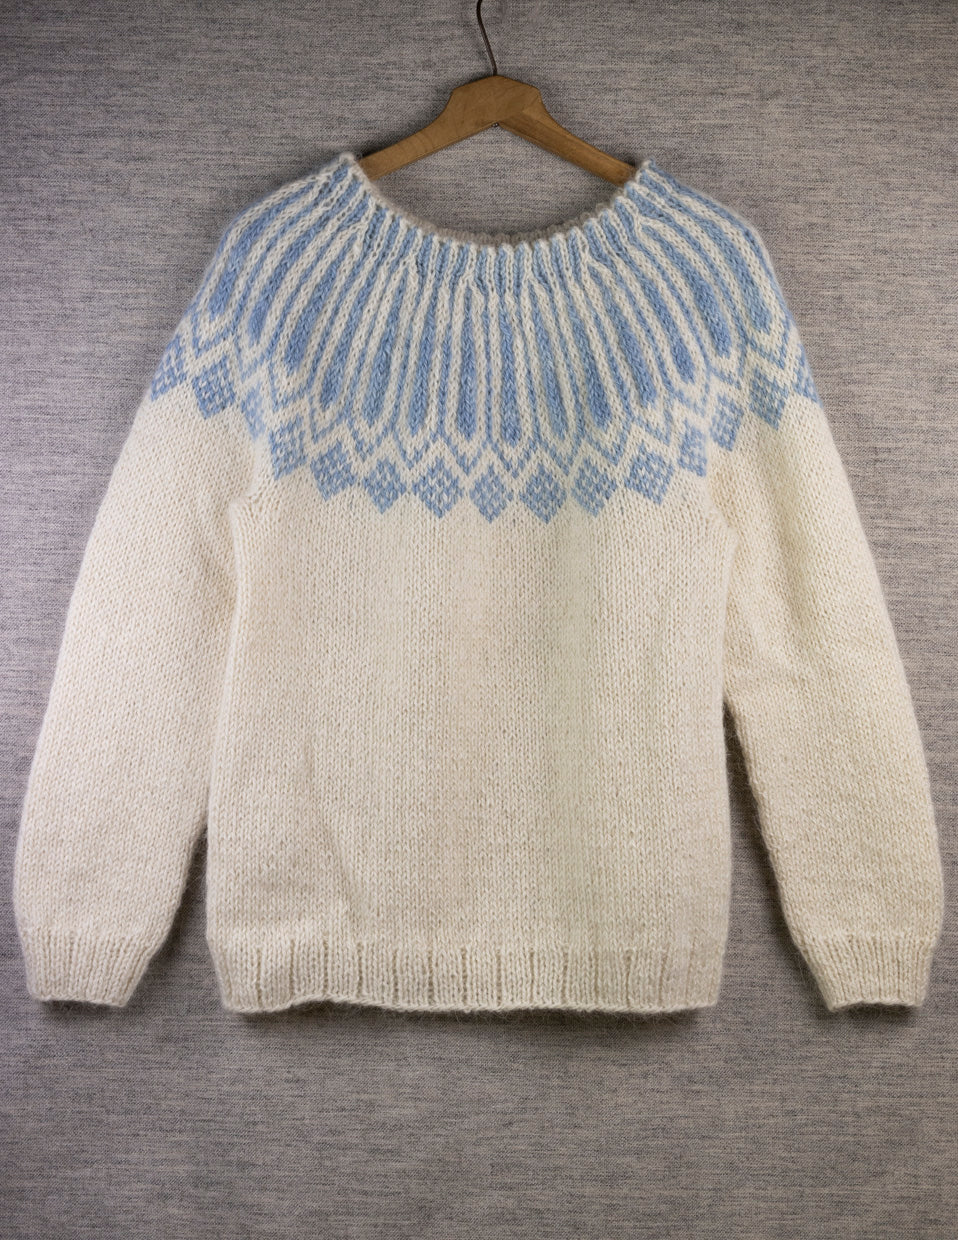 MARKUS sweater, knitting kit